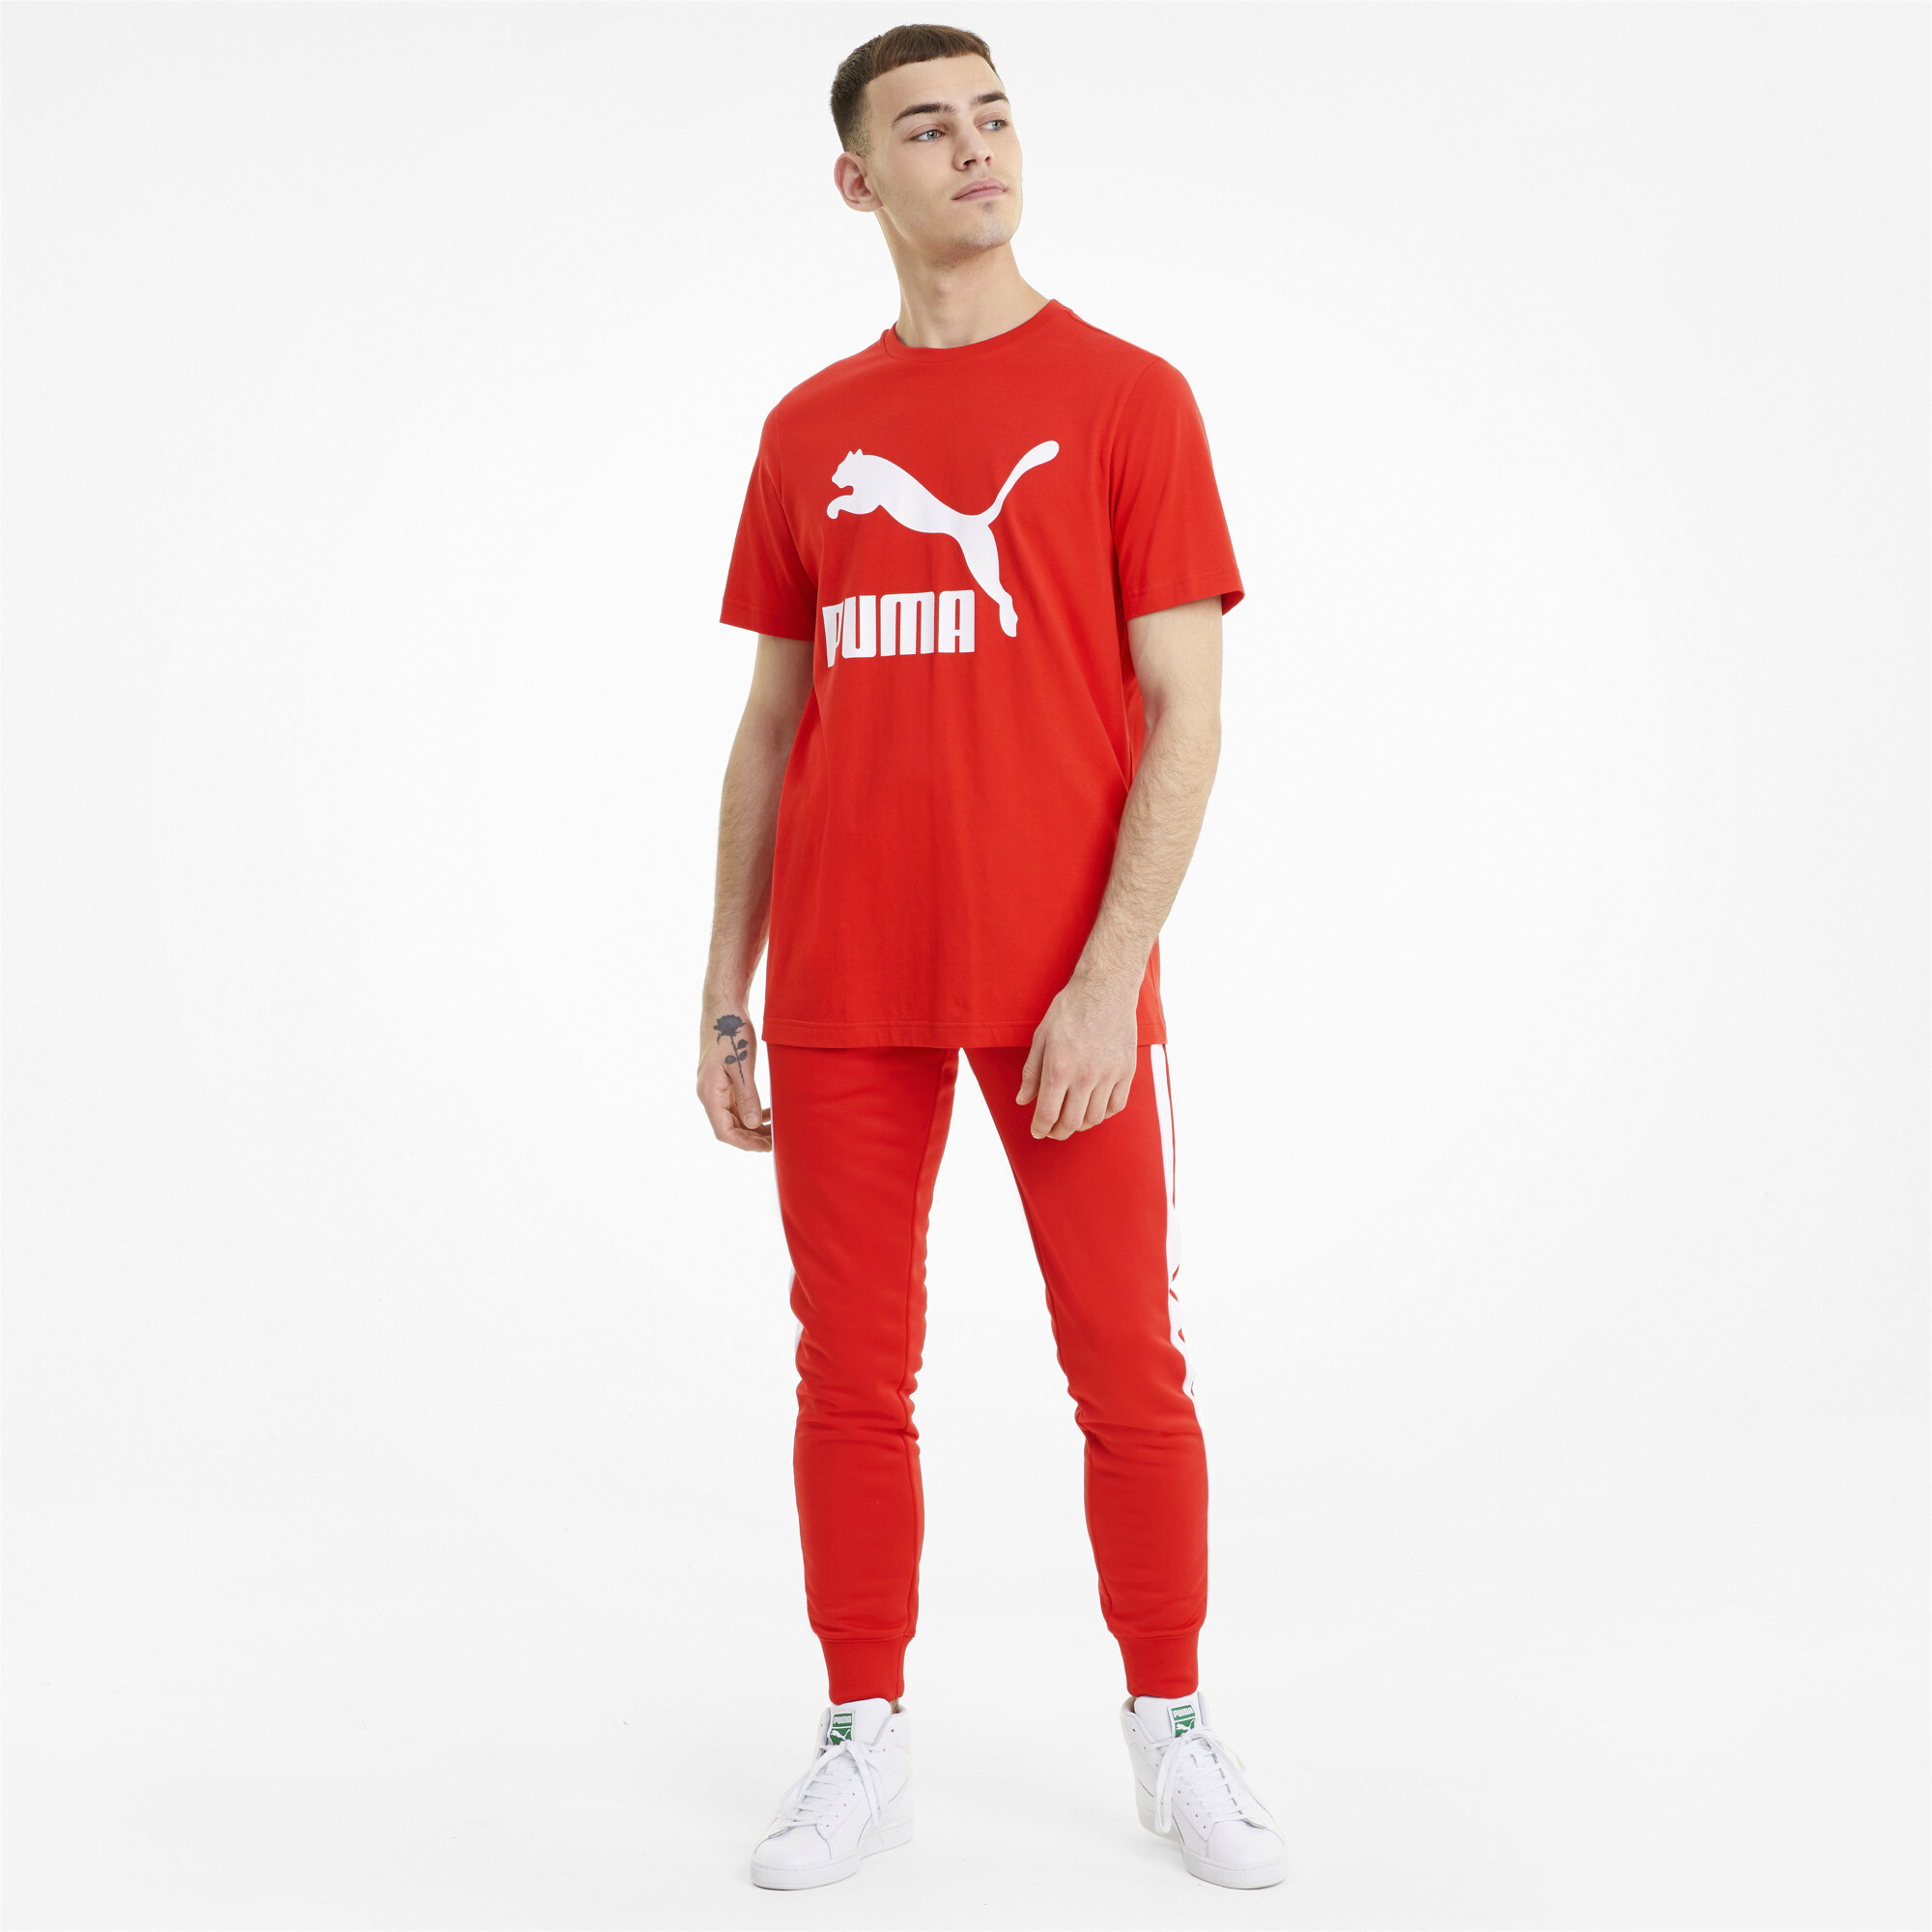 Men's Puma Classics's Logo T-Shirt, Red, Size 3XL, Clothing